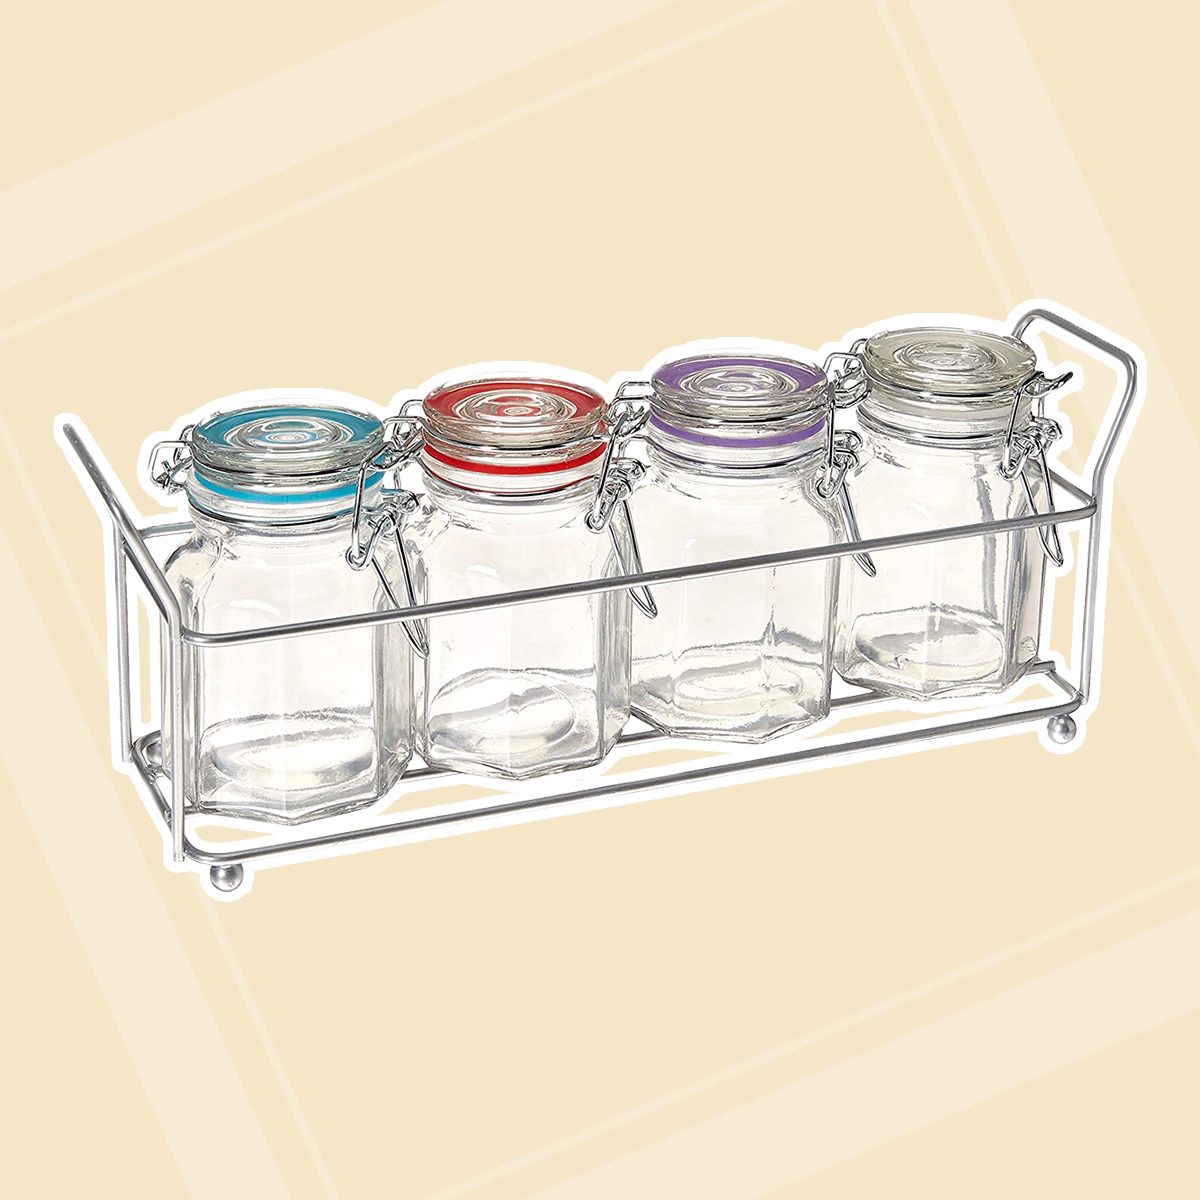 Circleware Round Mini Optic Glass Spice Jars with Hermetic Locking Lids, Set of